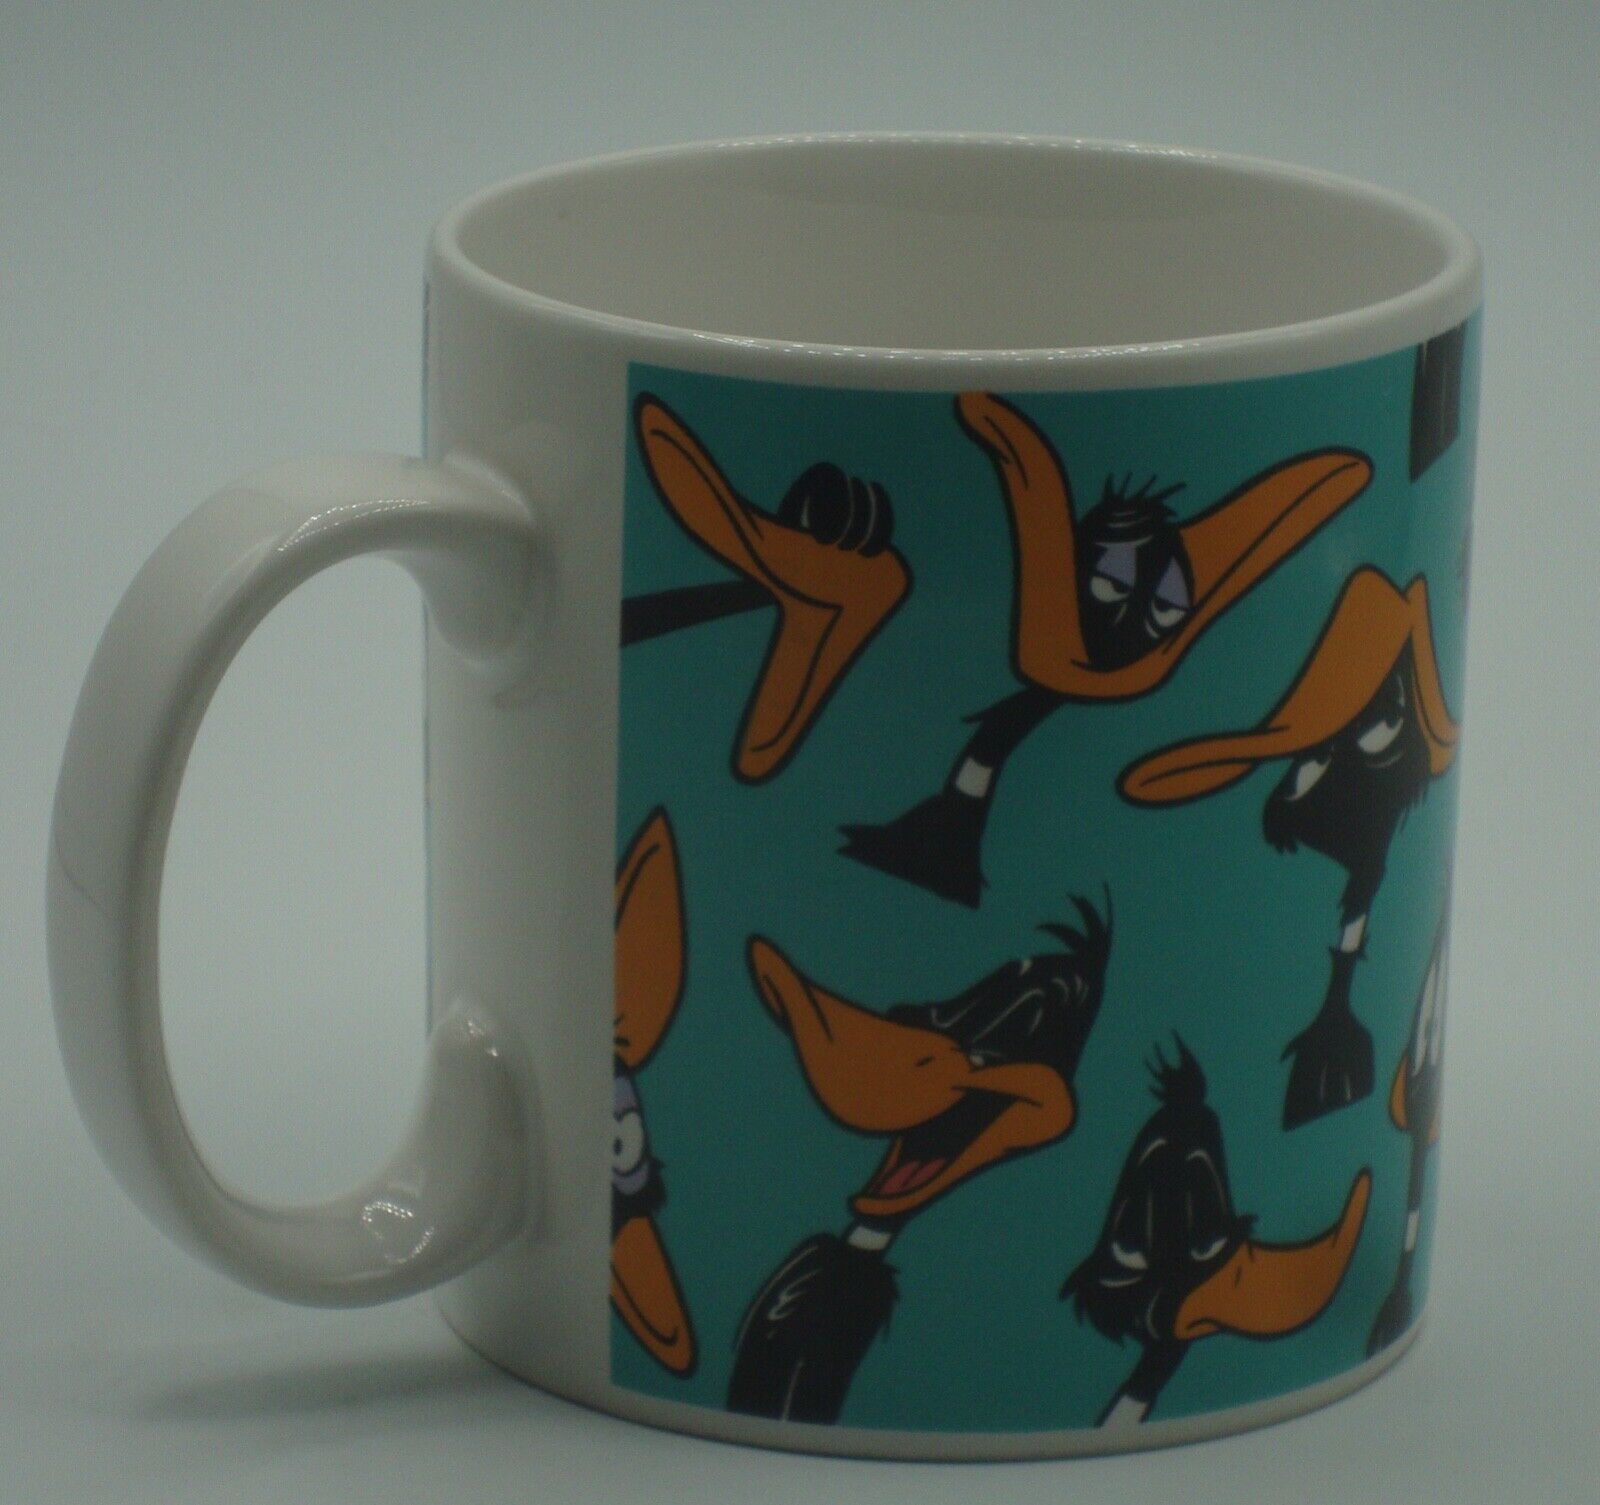 Vintage 1994 Applause Inc. Daffy Duck Warner Bros Coffee Tea Mug Faces Cartoon